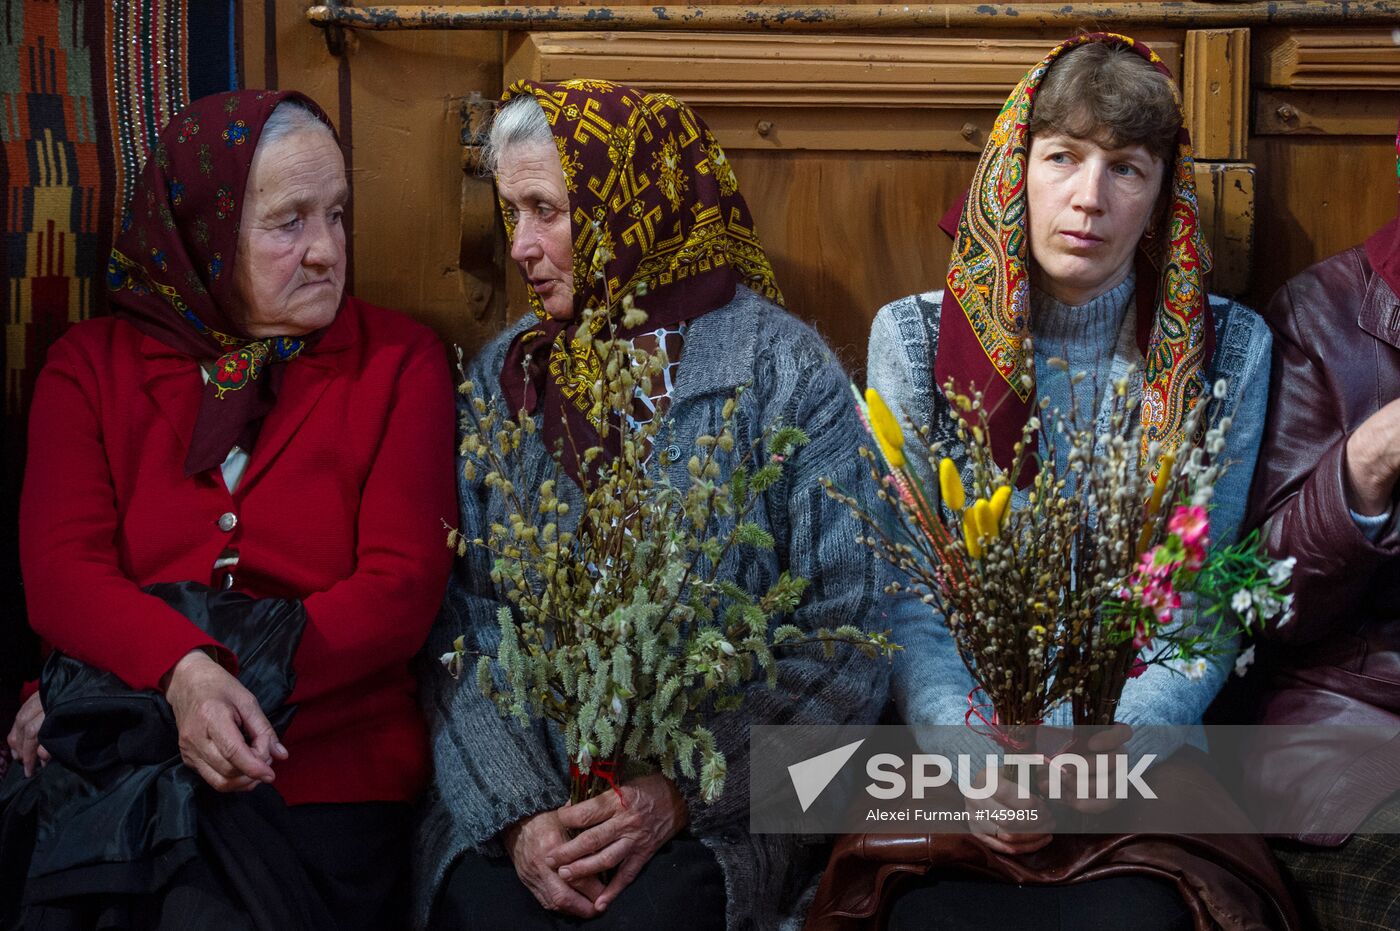 Russian Orthodox Christians Celebrate Palm Sunday